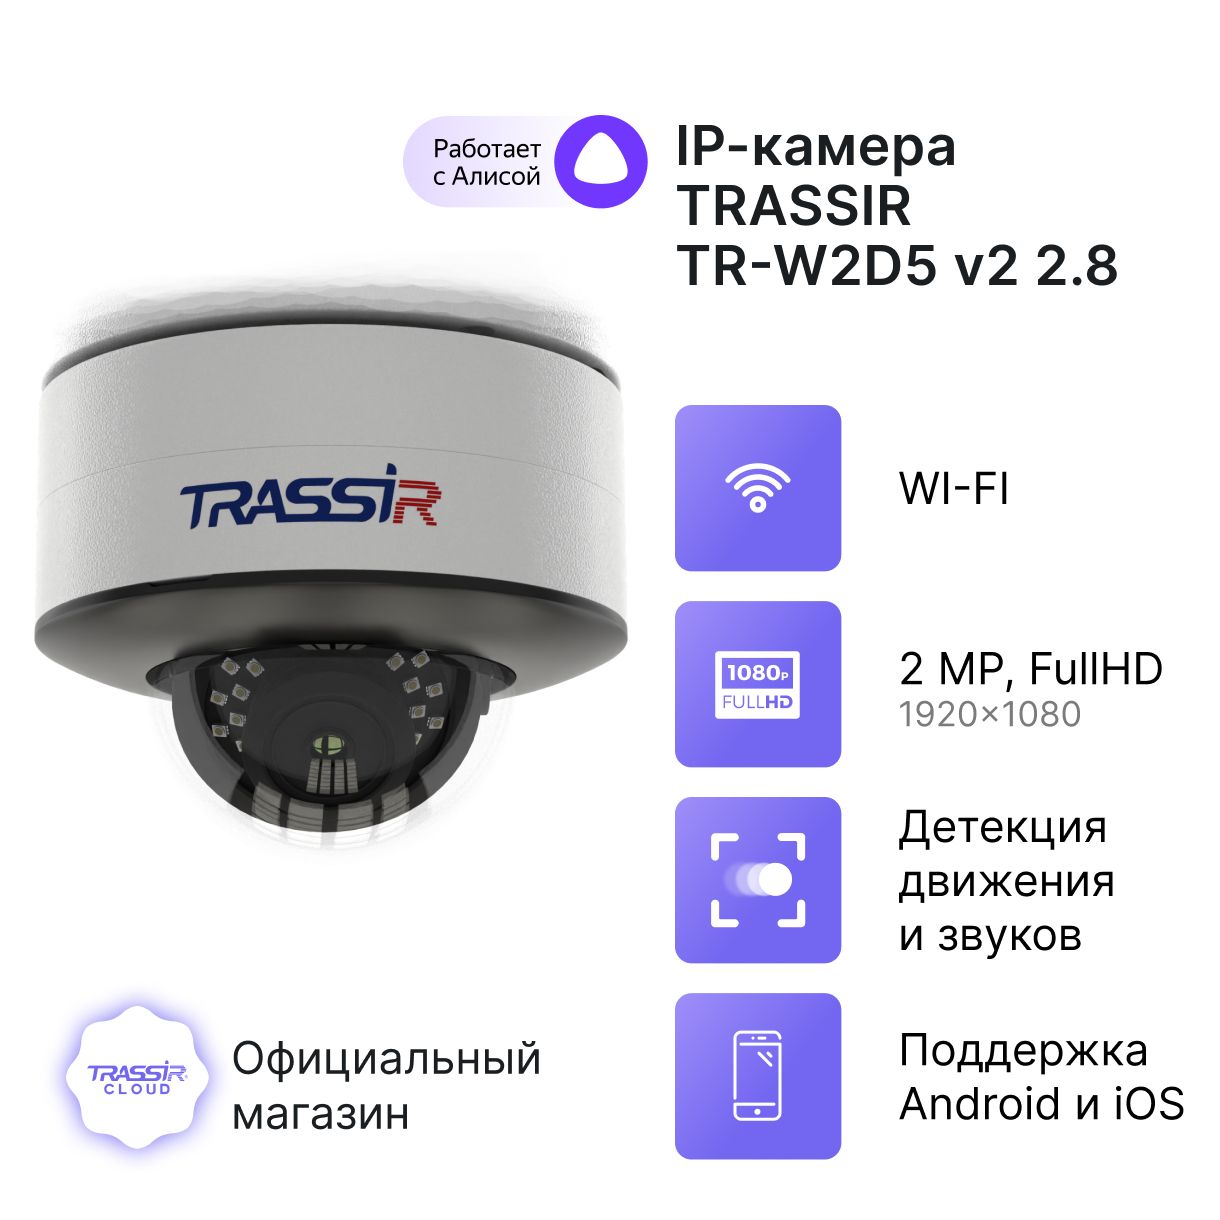 Камера видеонаблюдения облачная TRASSIR TR-W2D5 v2 2.8 с wi fi